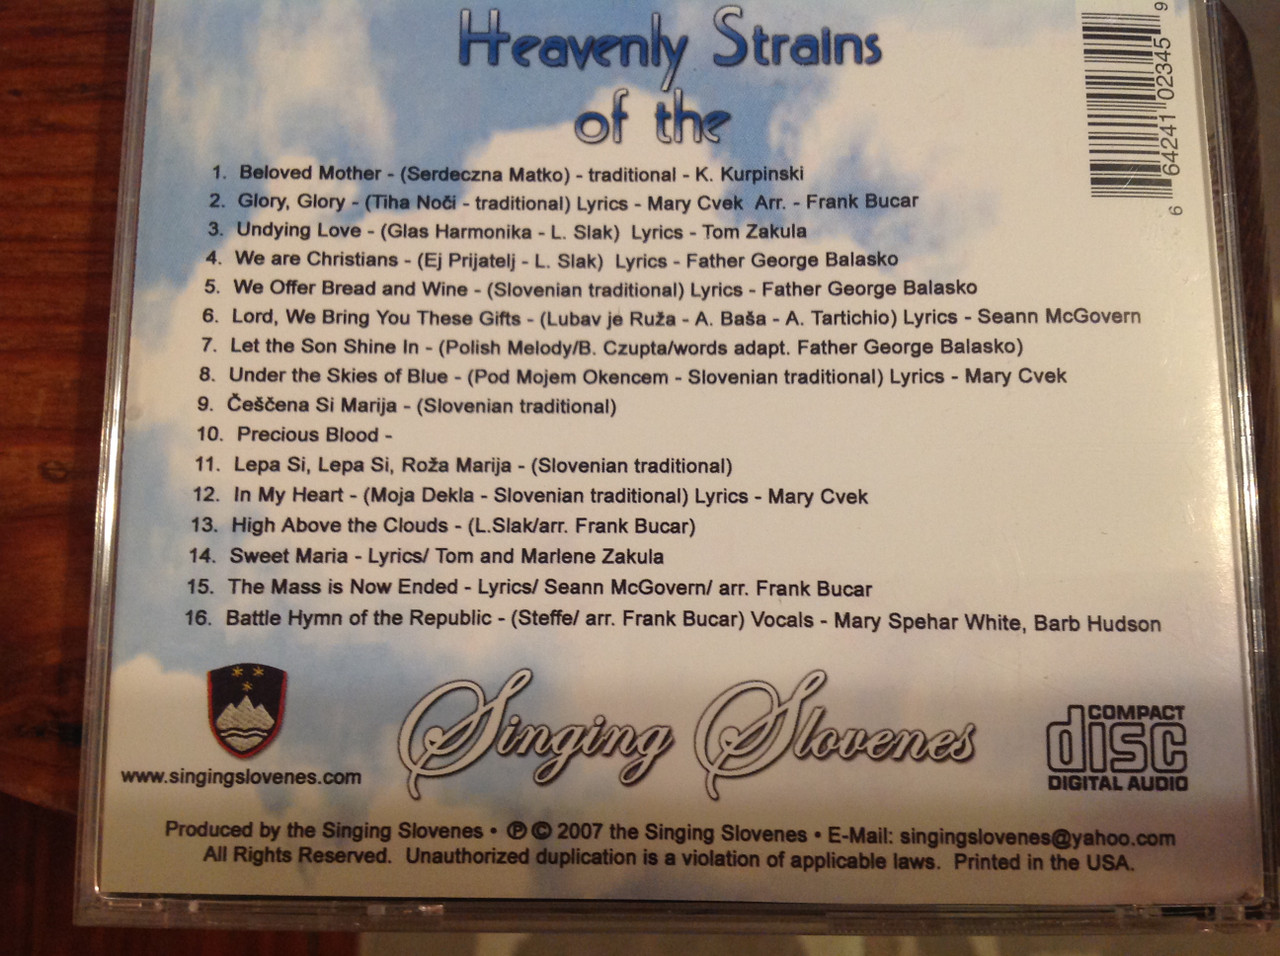 Heavenly Strains of the Singing Slovenes CD